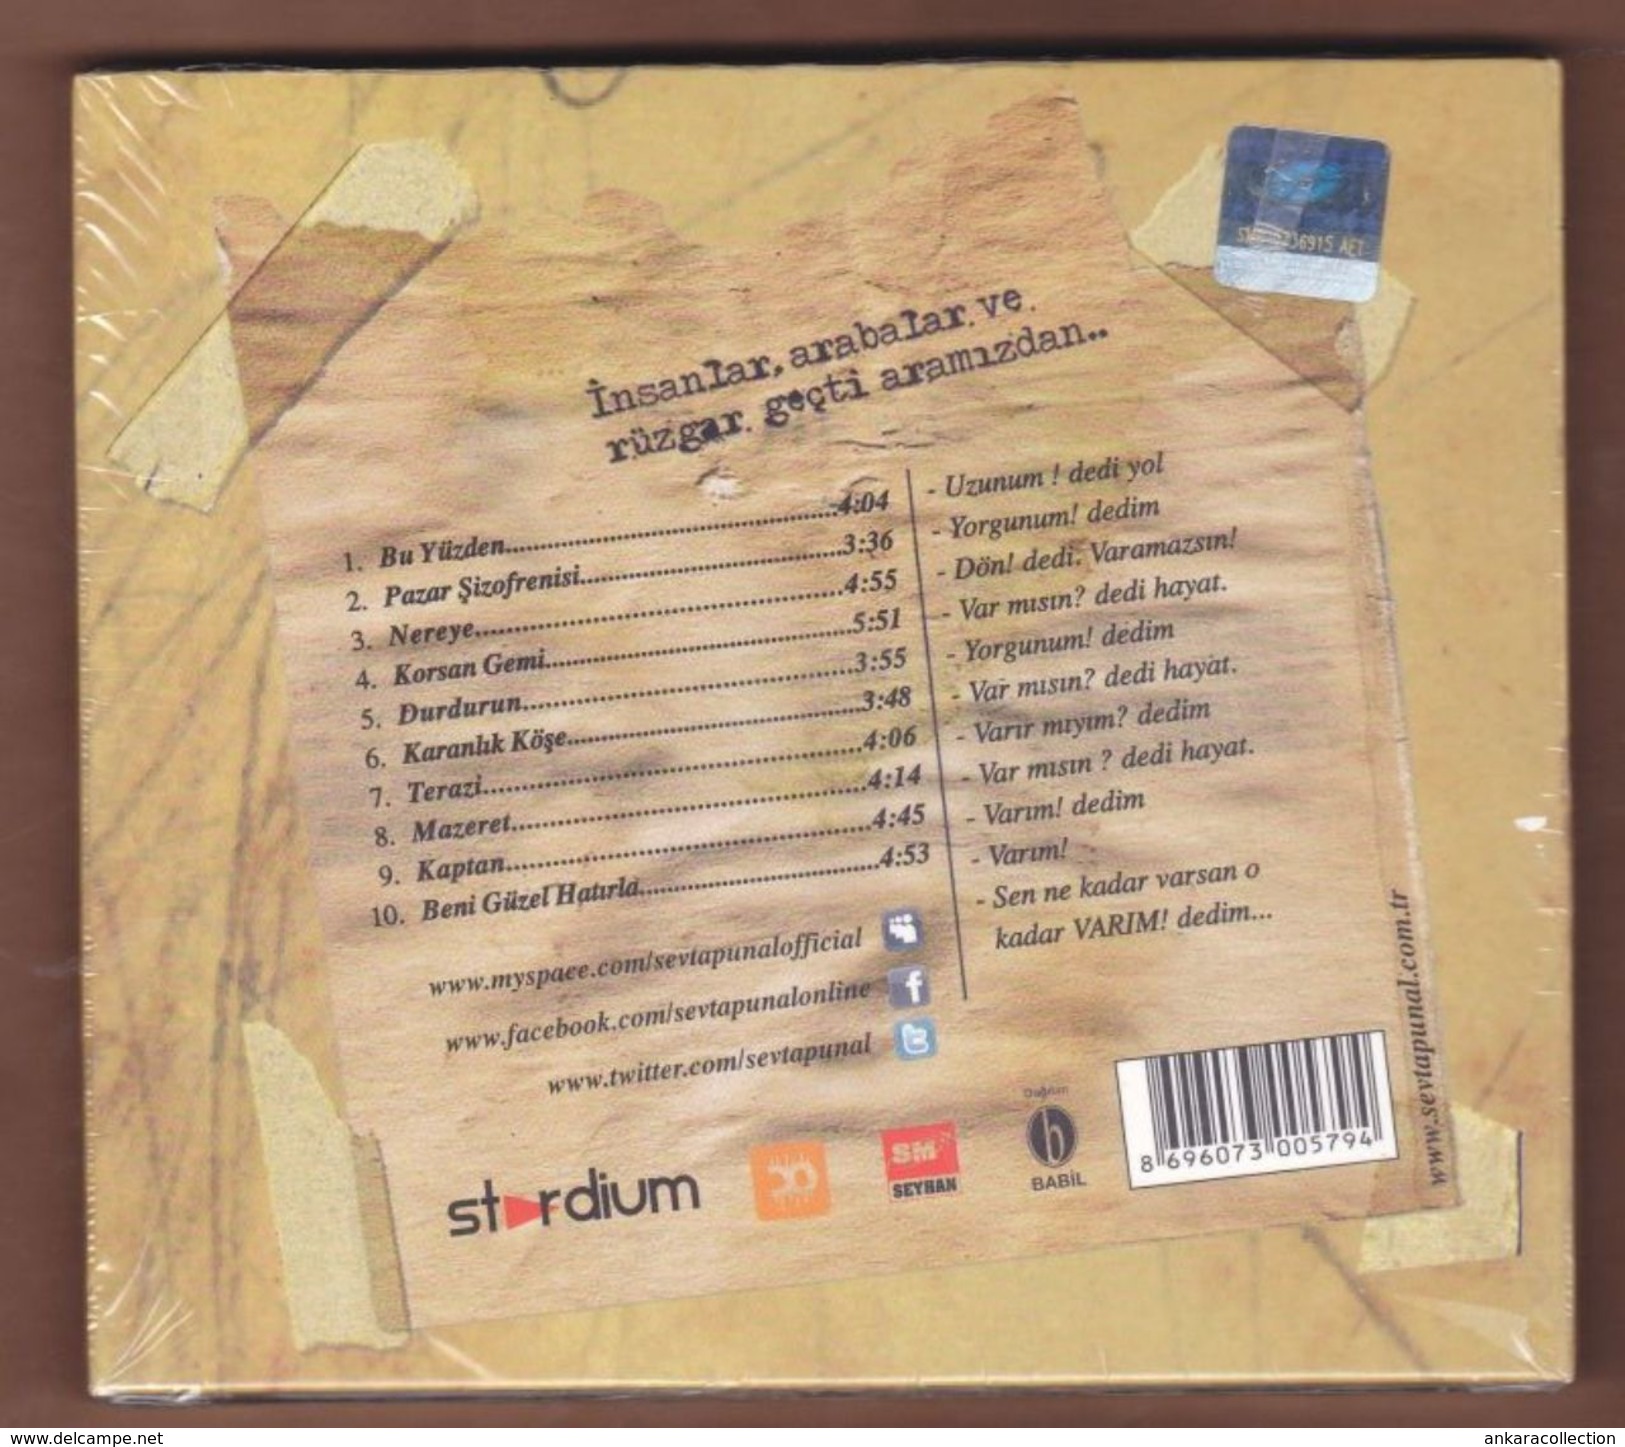 AC - Sevtap ünal Insanlar, Arabalar Ve Rüzgar Geçti Aramızdan BRAND NEW TURKISH MUSIC CD - Musiques Du Monde